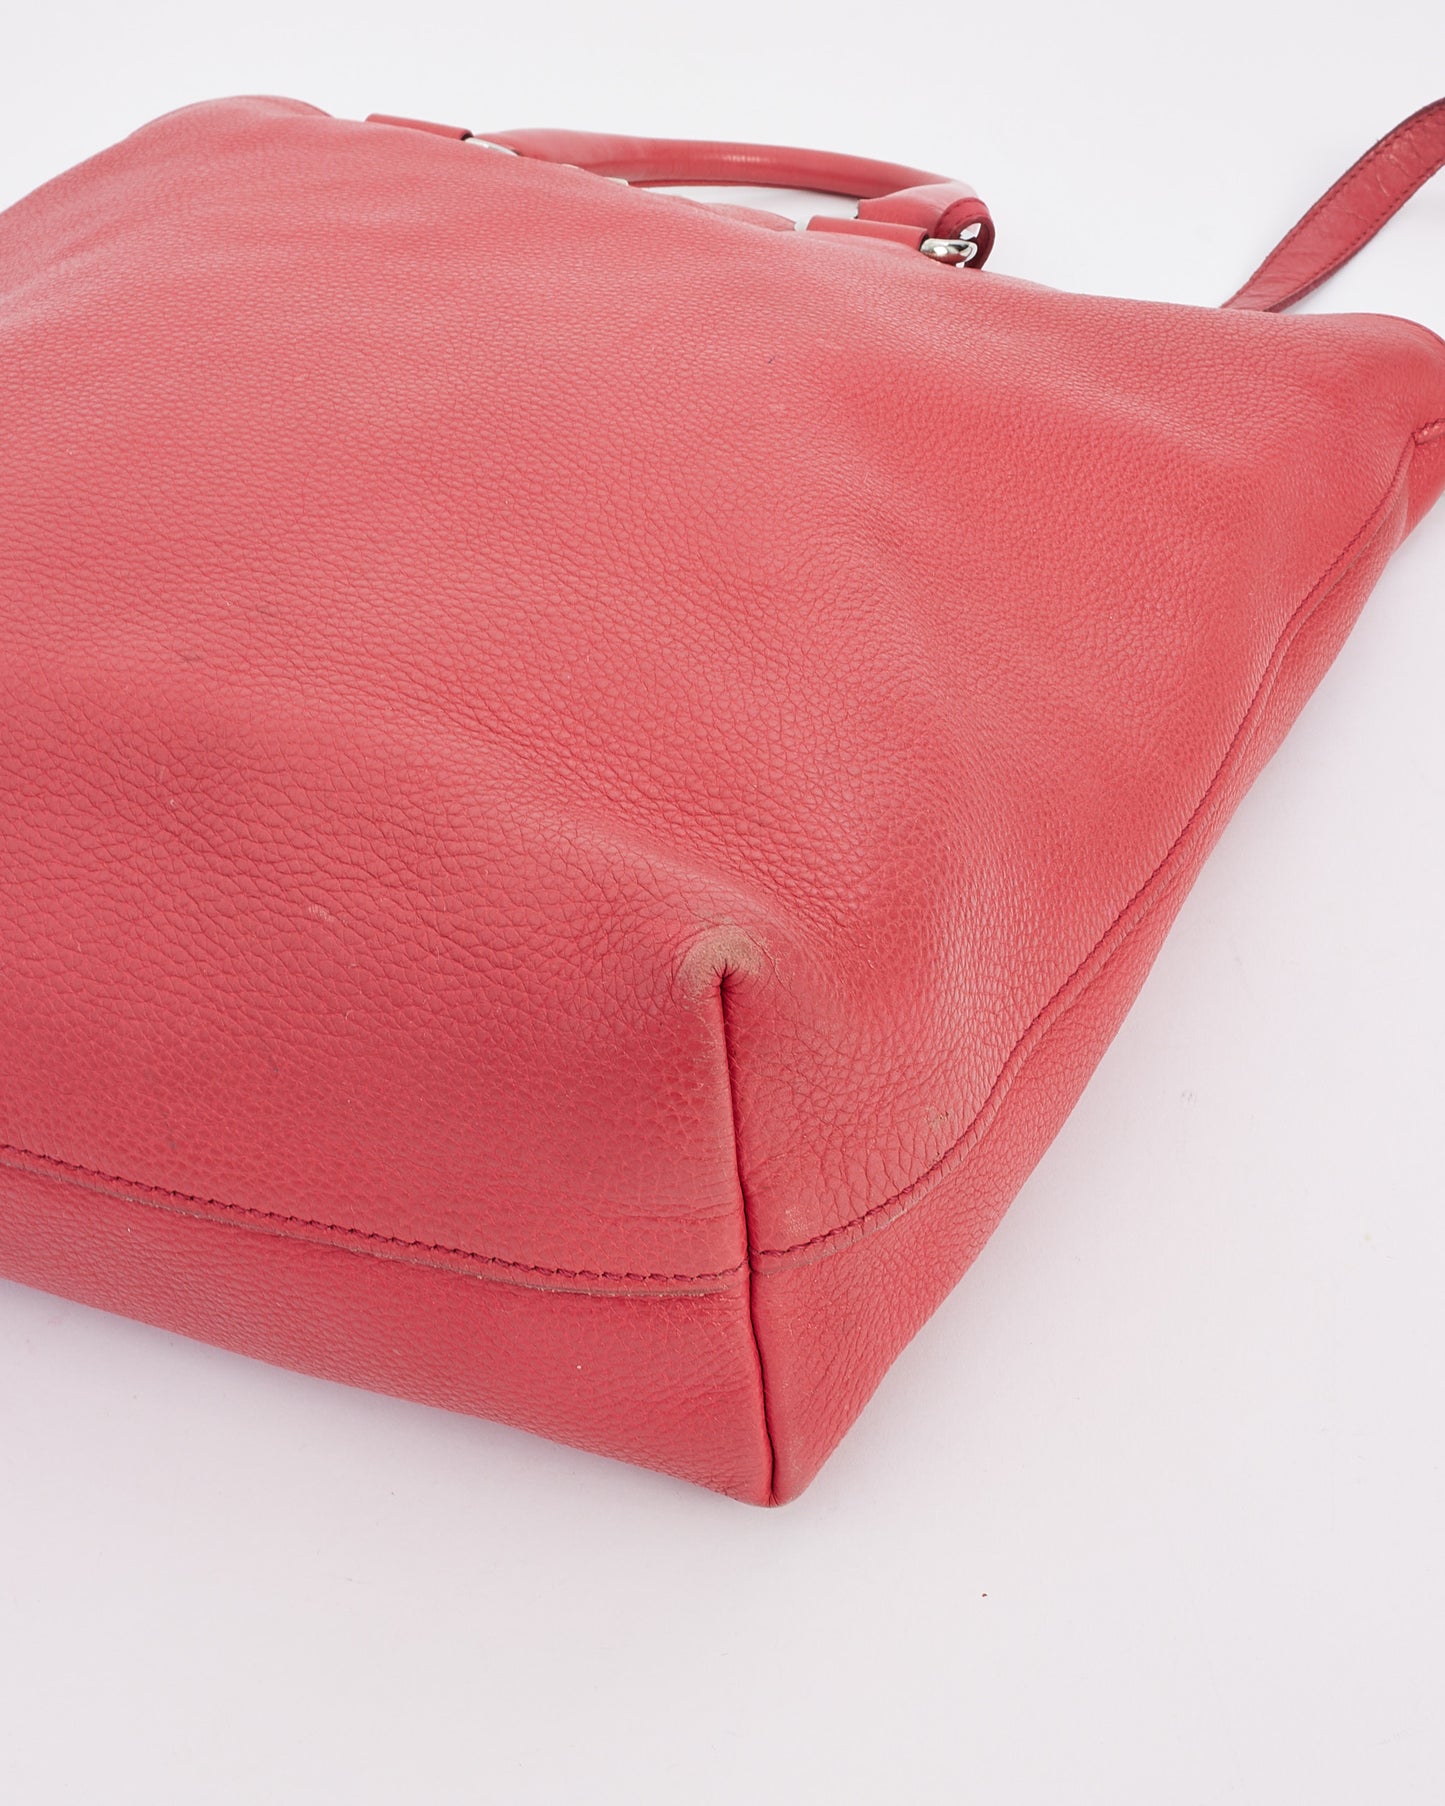 Prada Rose Red Leather Daino Large Convertible Tote Bag